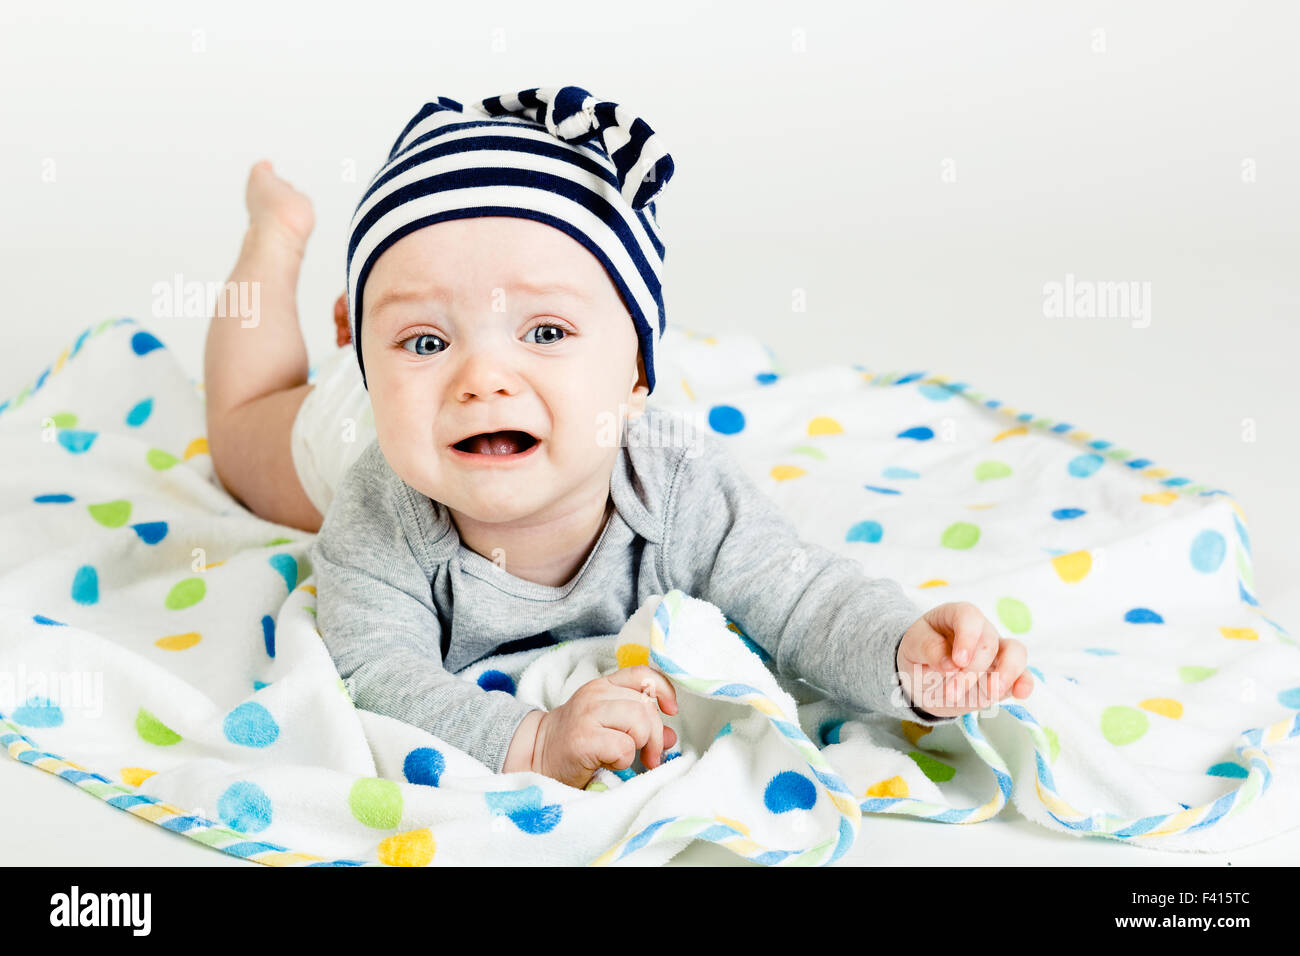 Adorable baby screaming Stock Photo